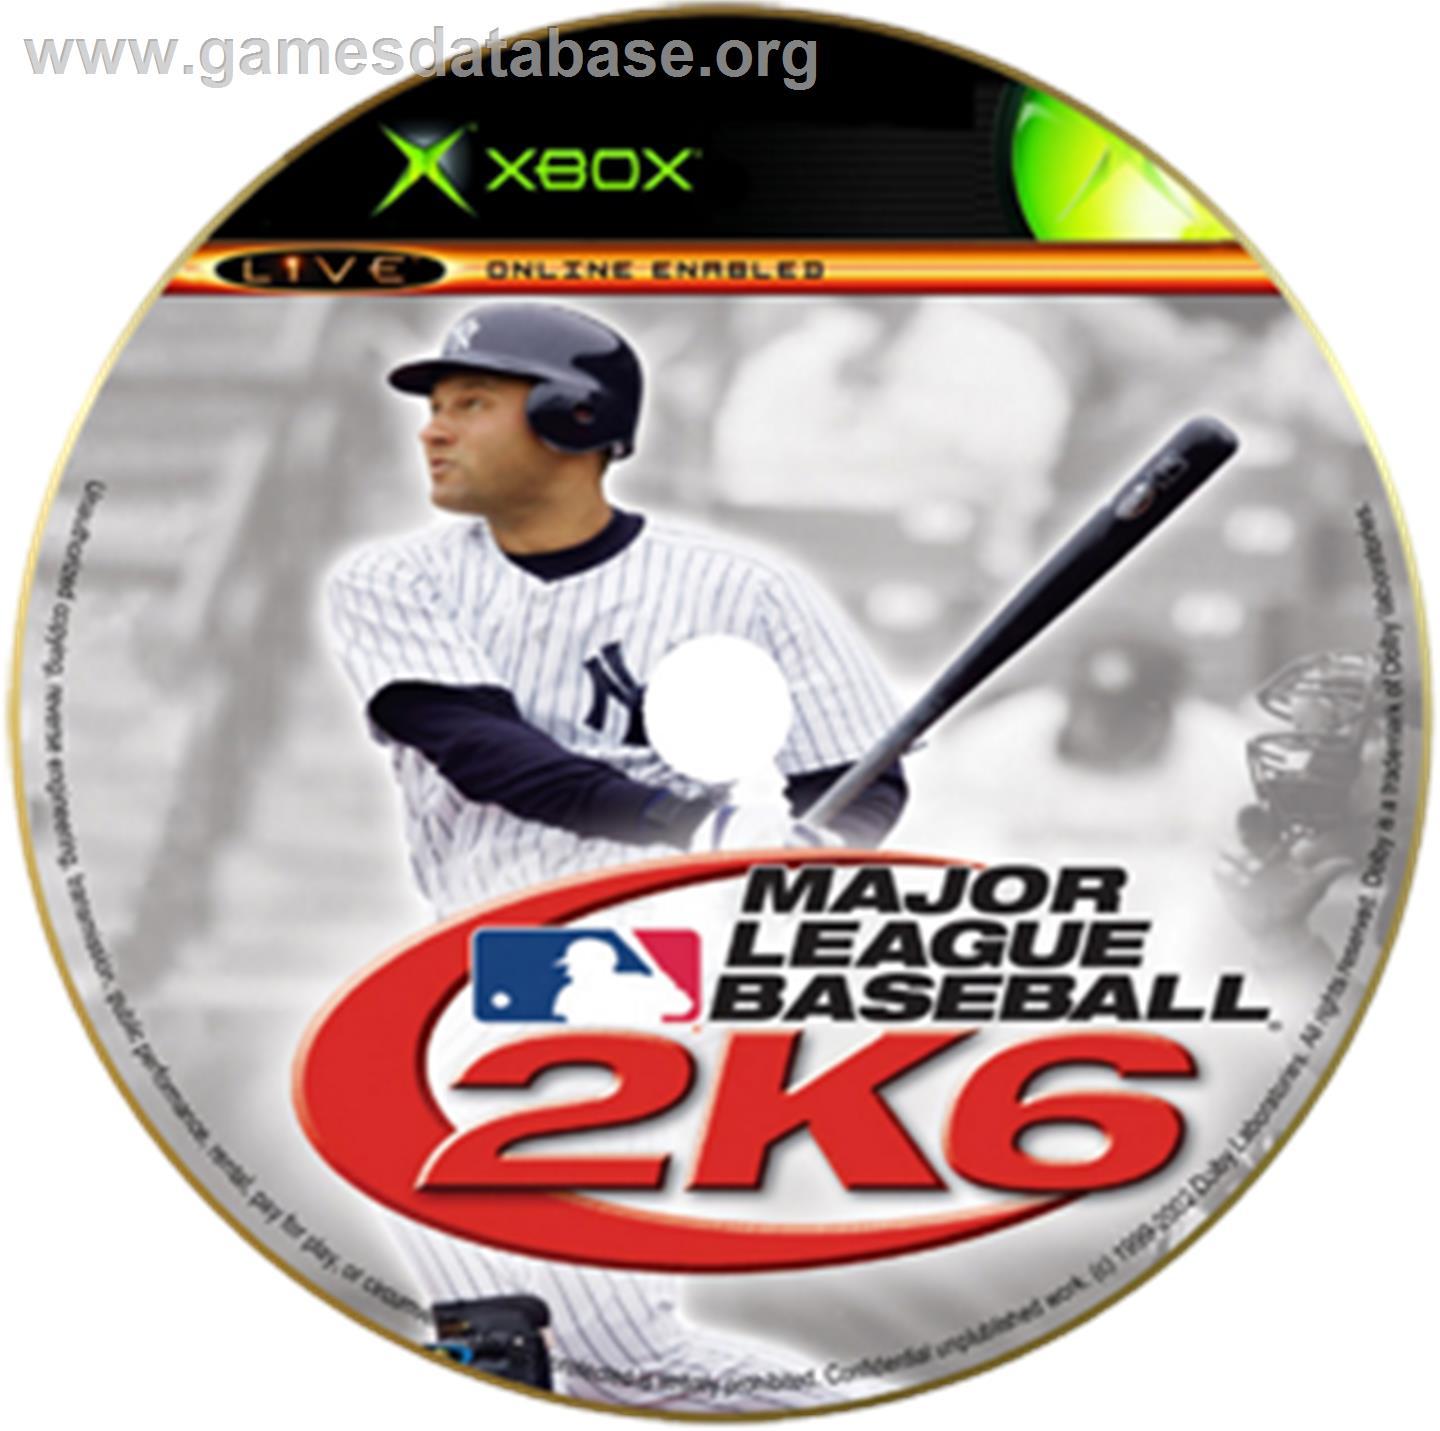 Major League Baseball 2K6 - Microsoft Xbox - Artwork - CD